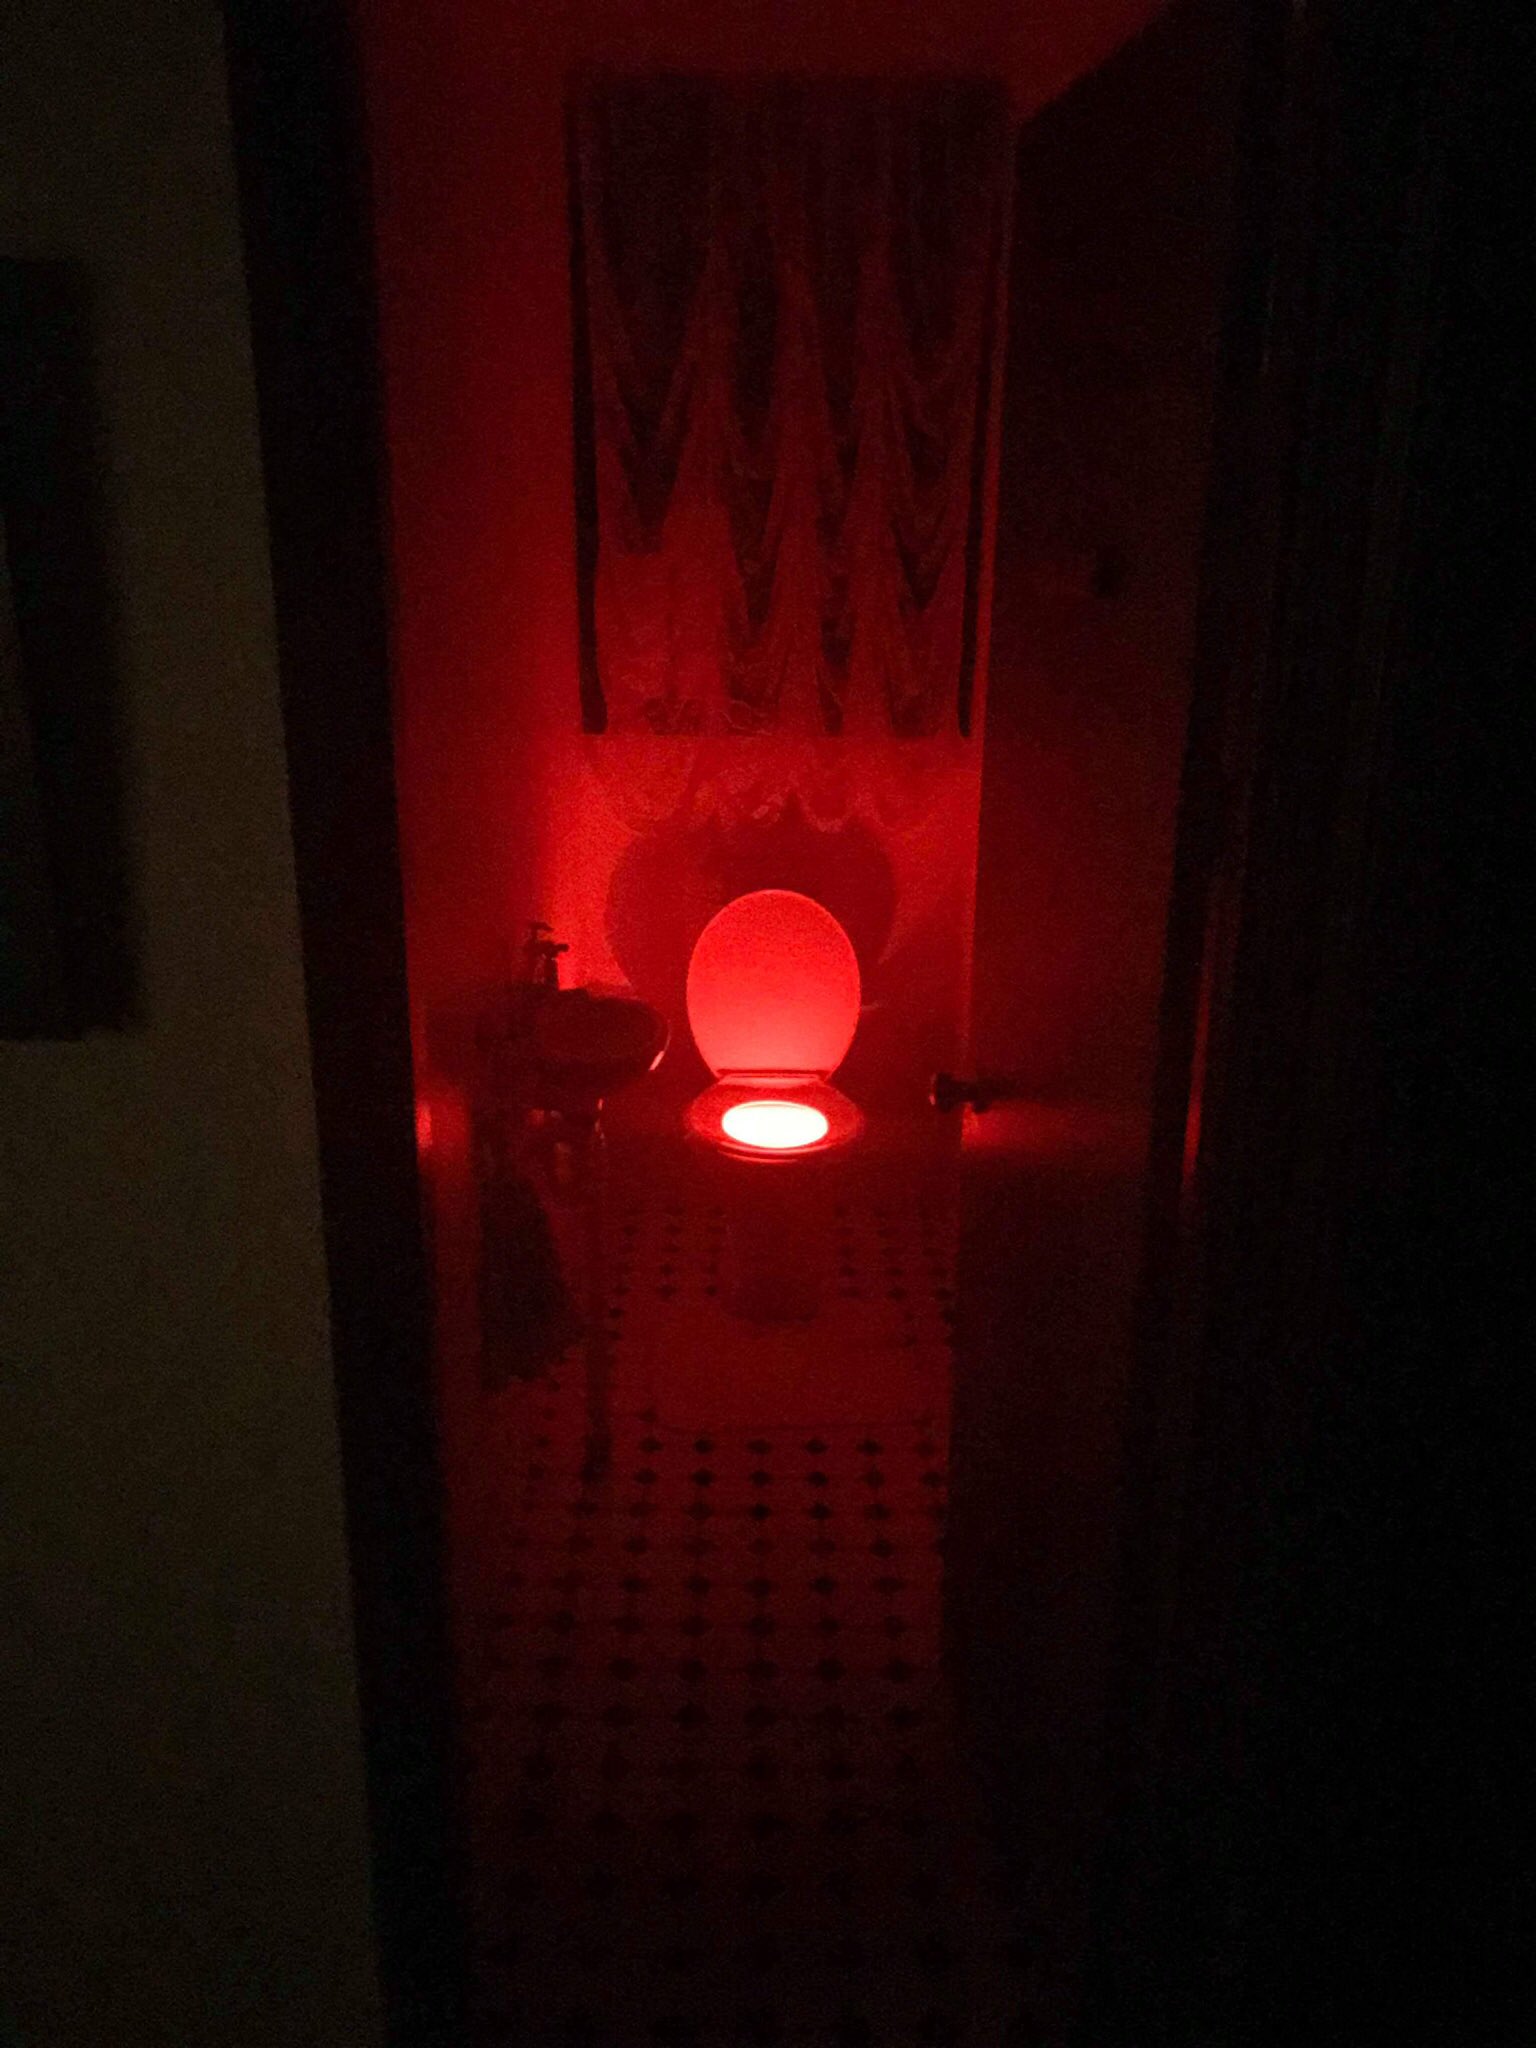 threatening bathrooms - toilets with threatening auras